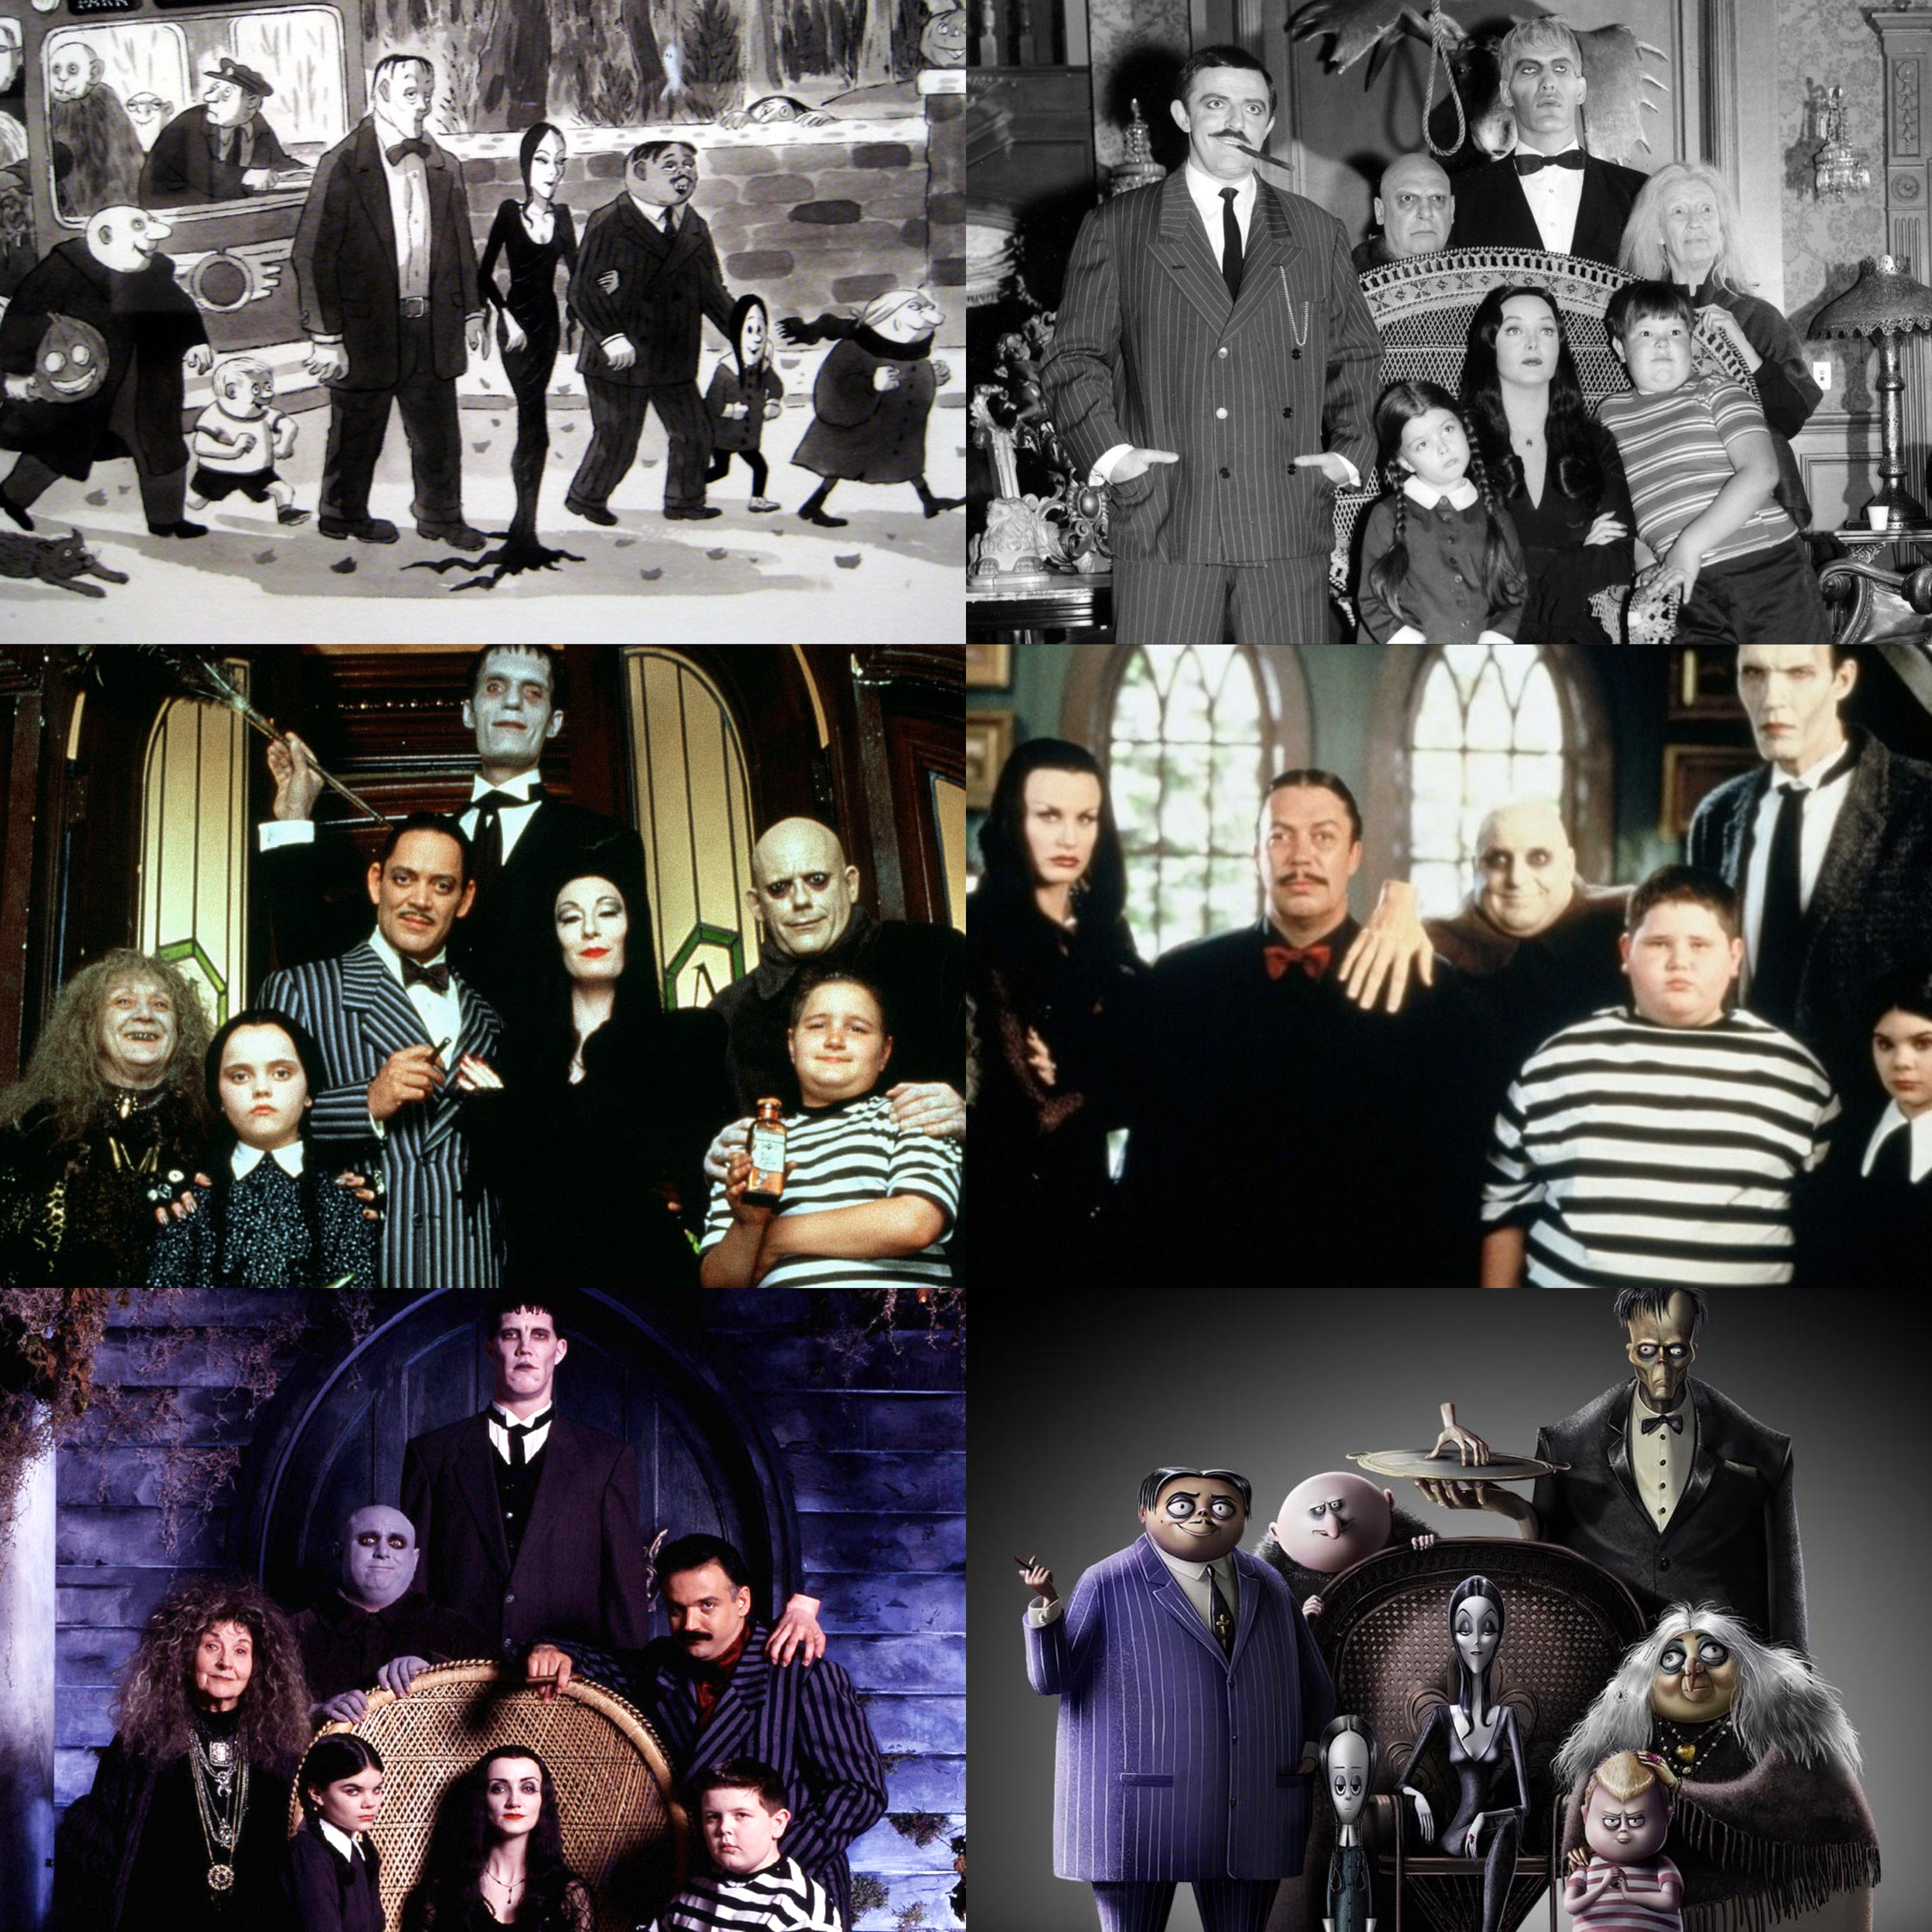 79. The Addams Family — Adapt or Perish